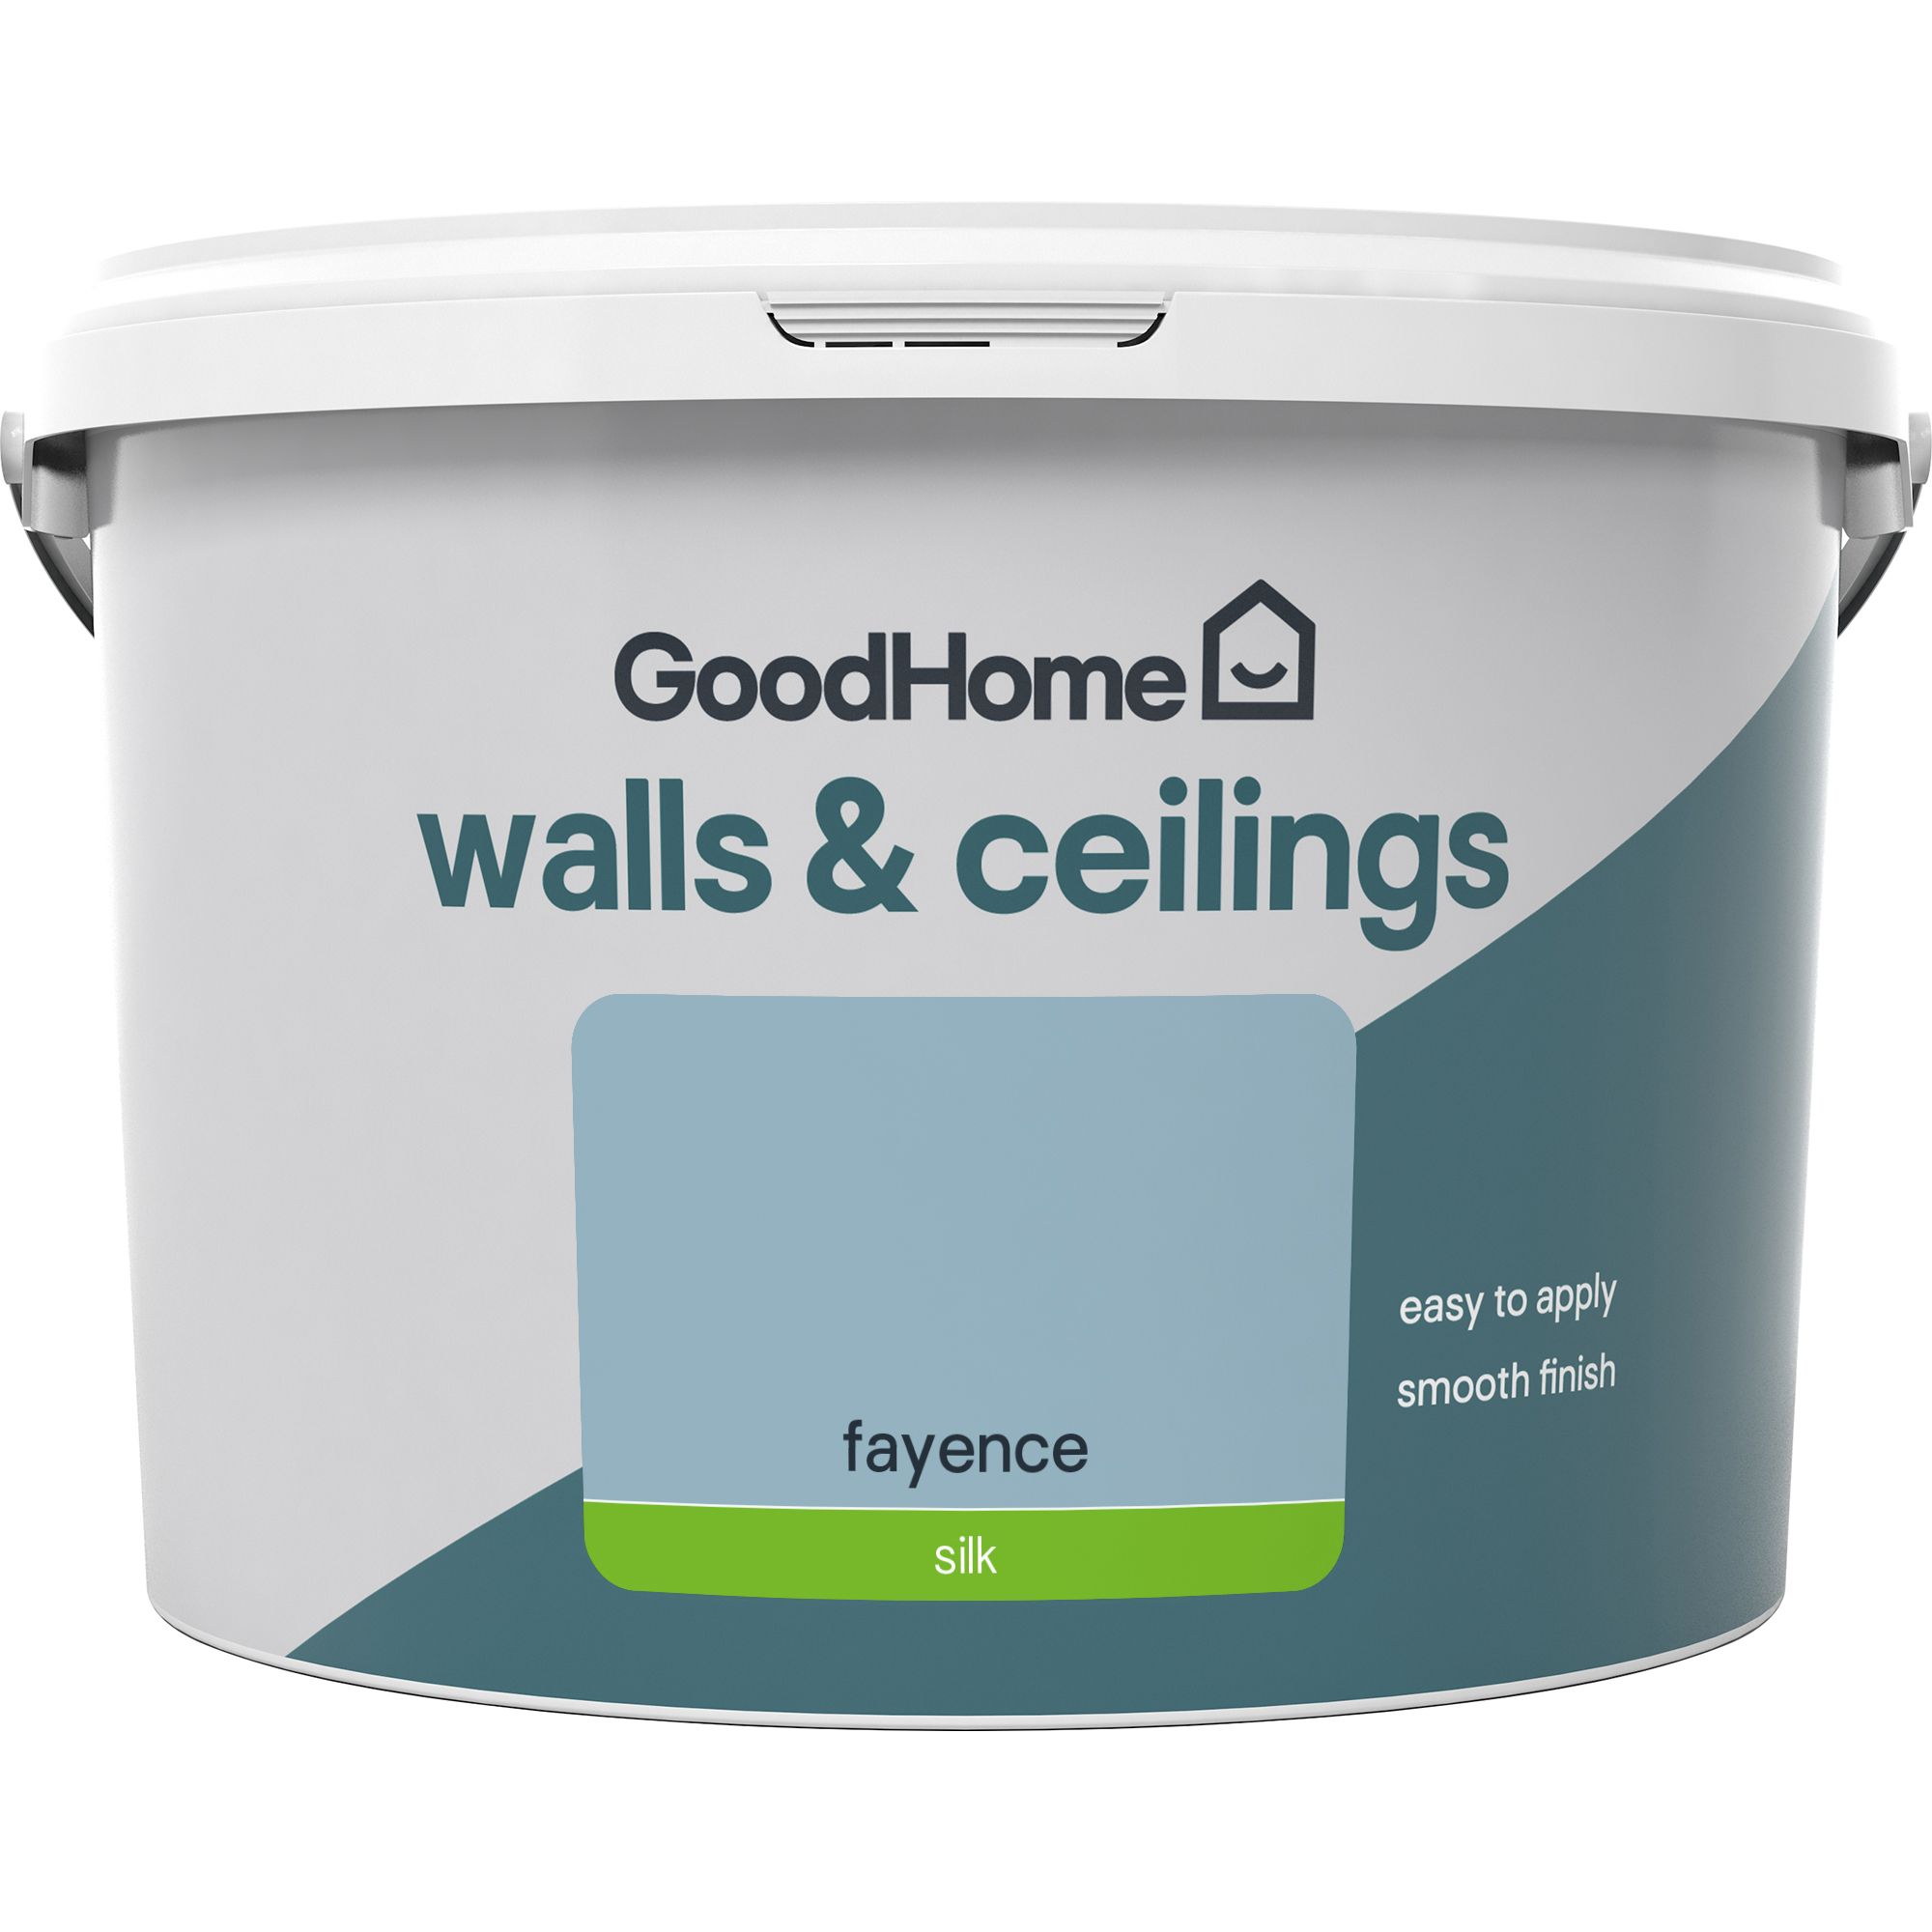 GoodHome Walls & ceilings Fayence Silk Emulsion paint, 2.5L